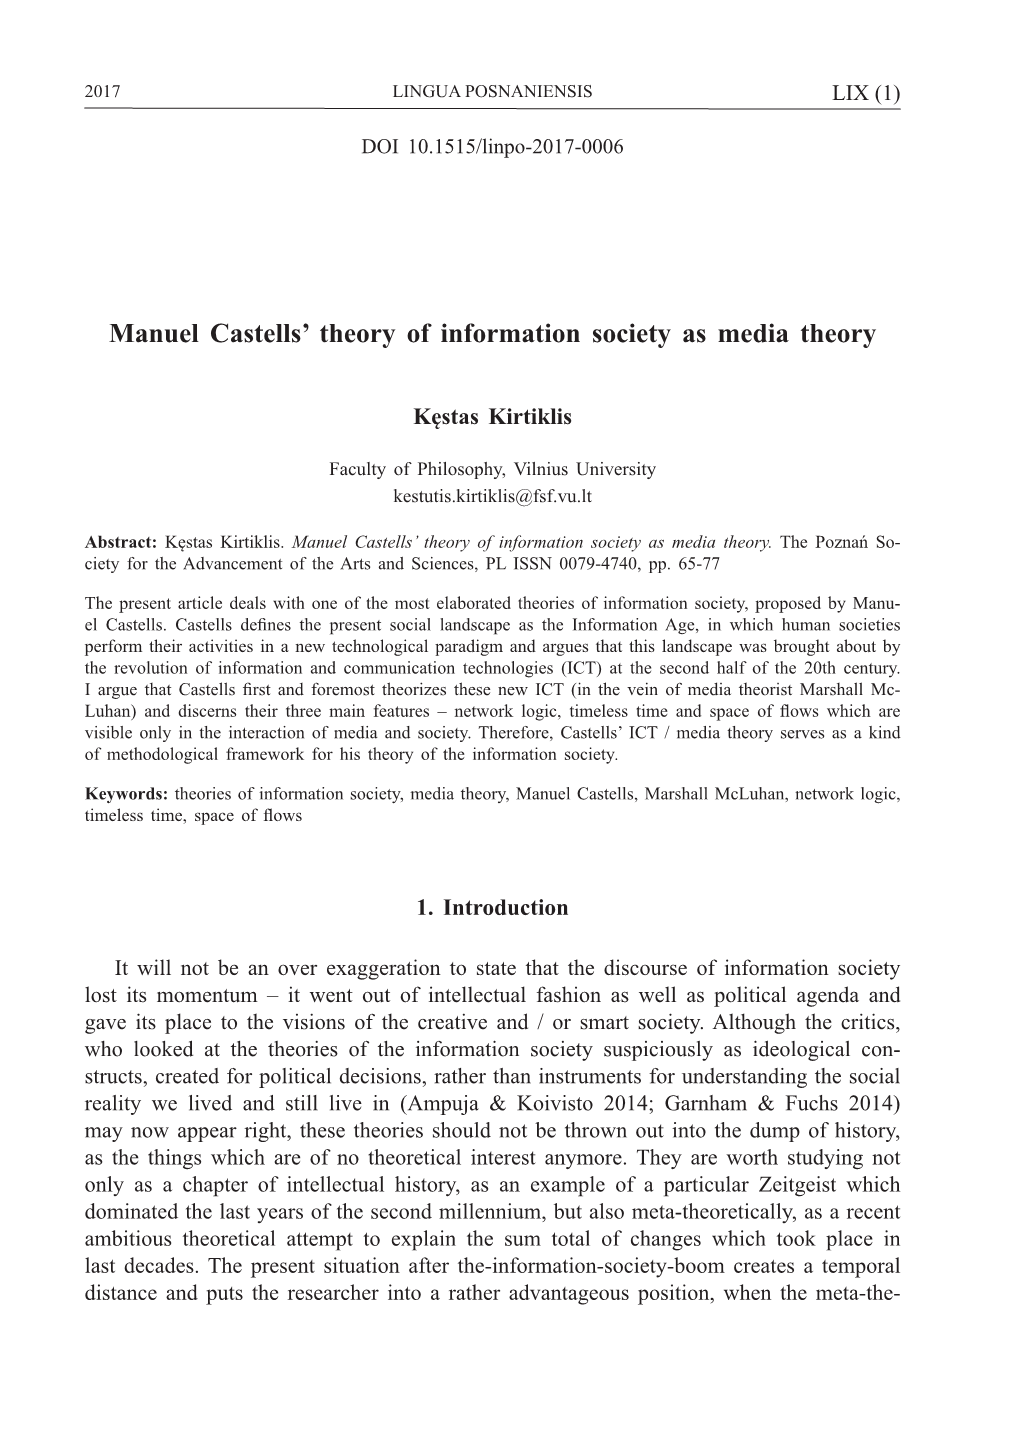 Manuel Castells' Theory of Information Society As Media Theory